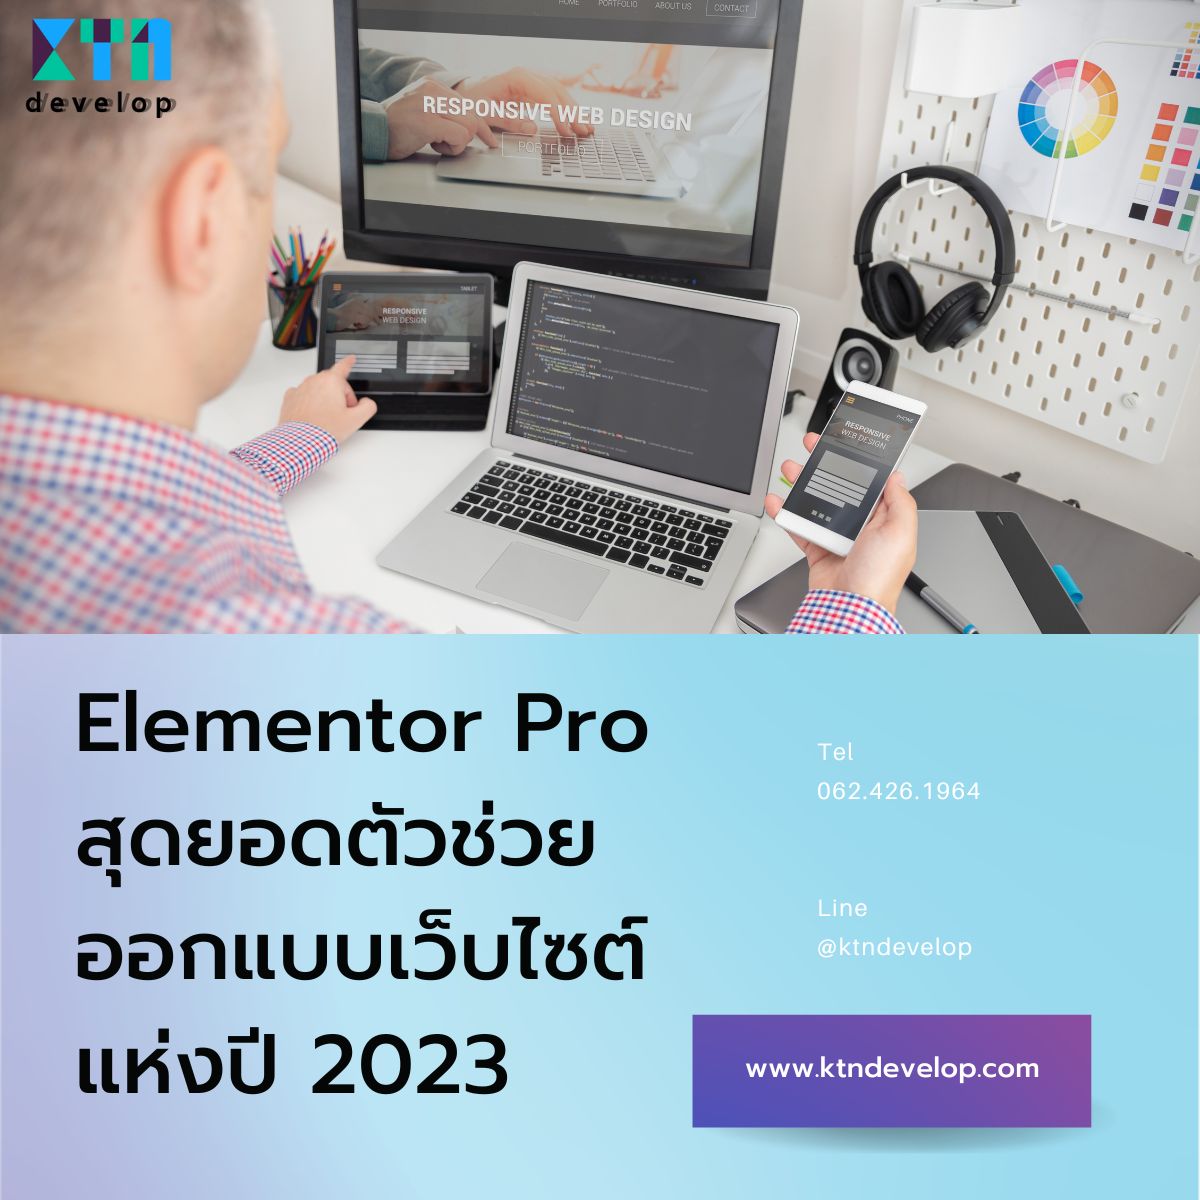 Elementor Pro สุดยอดตัวช่วยออกแบบเว็บไซต์แห่งปี 2023